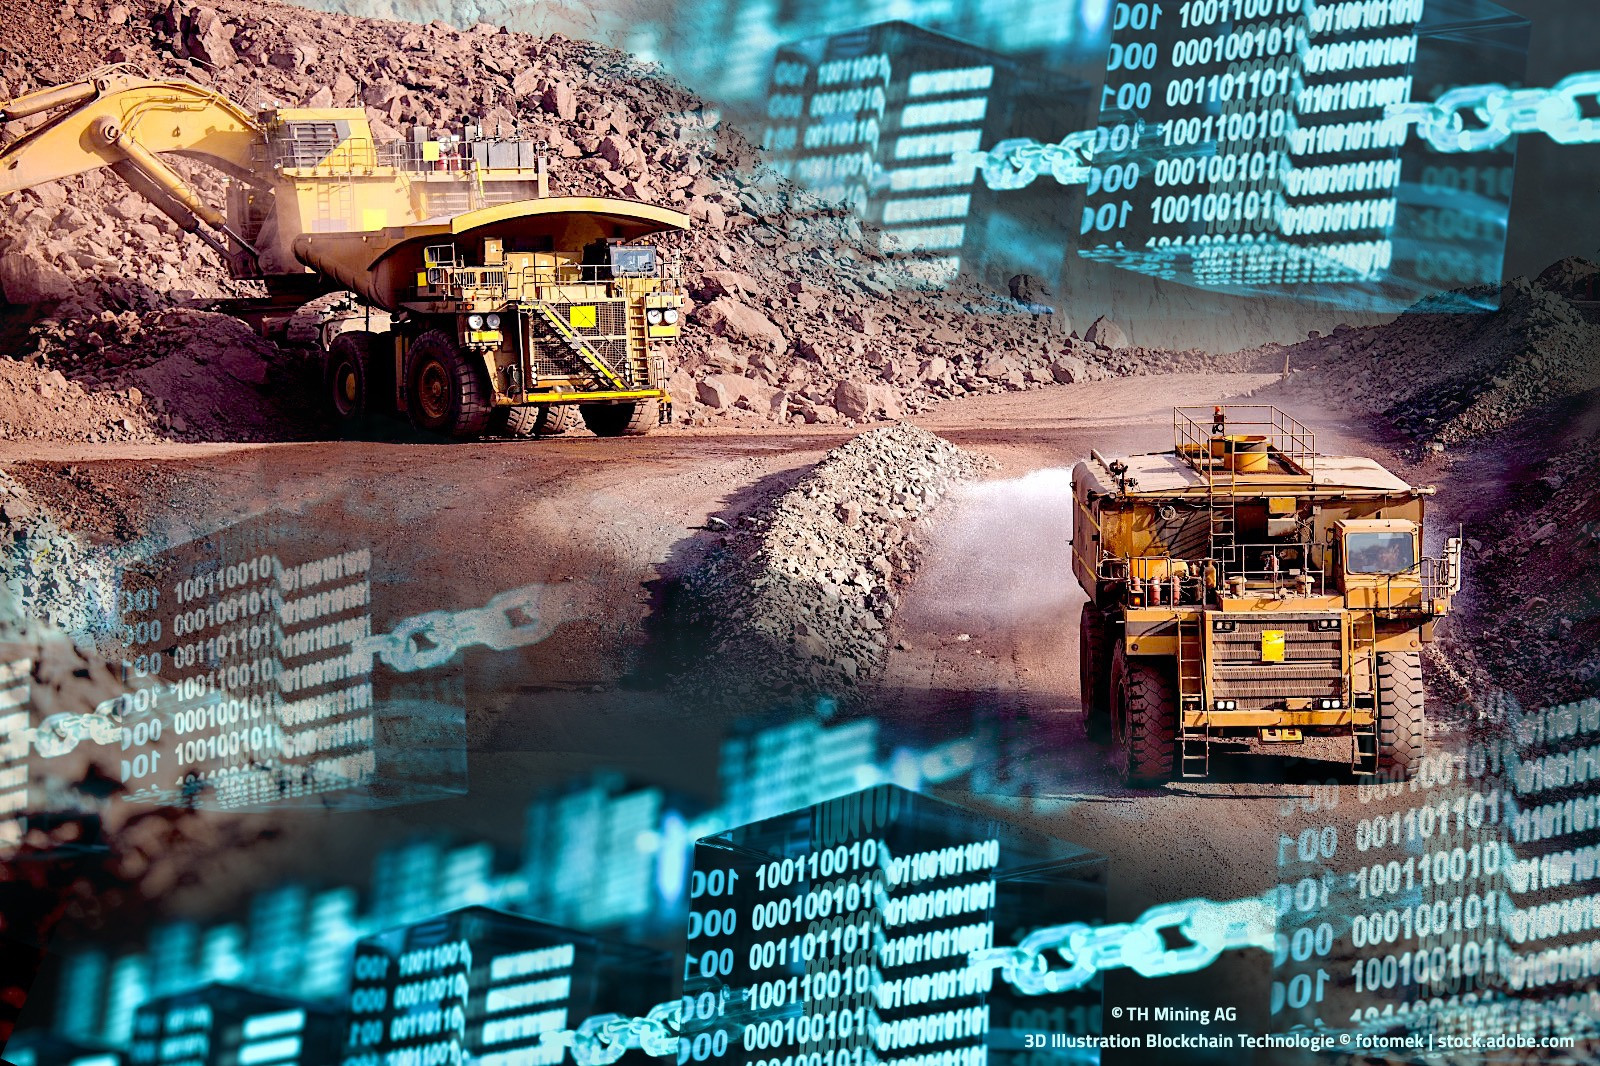 Bergbau goes Blockchain!